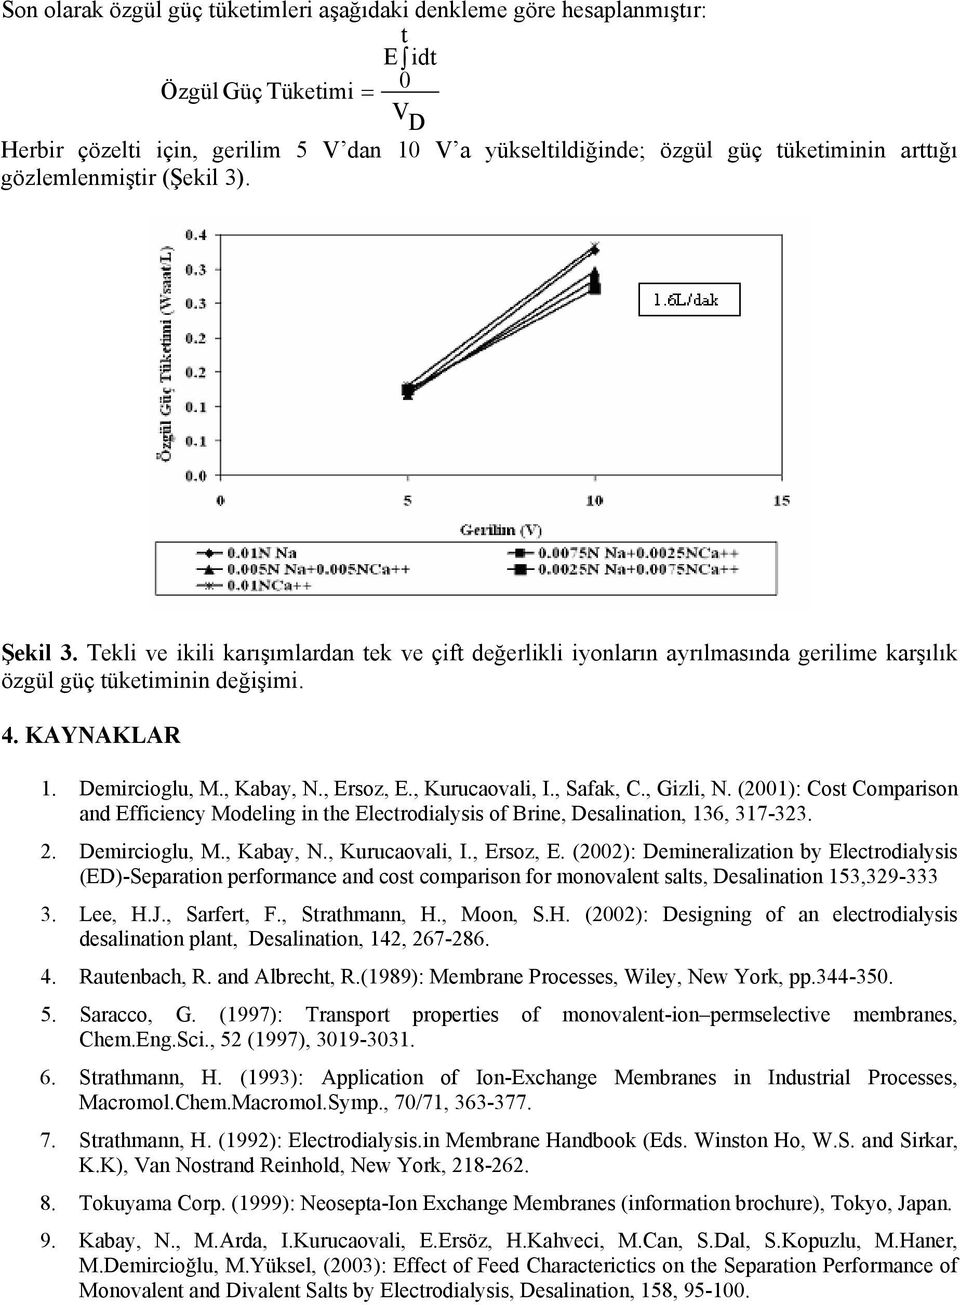 , Kabay, N., Ersoz, E., Kurucaovali, I., Safak, C., Gizli, N. (2001): Cost Comparison and Efficiency Modeling in the Electrodialysis of Brine, Desalination, 136, 317-323. 2. Demircioglu, M., Kabay, N., Kurucaovali, I., Ersoz, E. (2002): Demineralization by Electrodialysis (ED)-Separation performance and cost comparison for monovalent salts, Desalination 153,329-333 3.